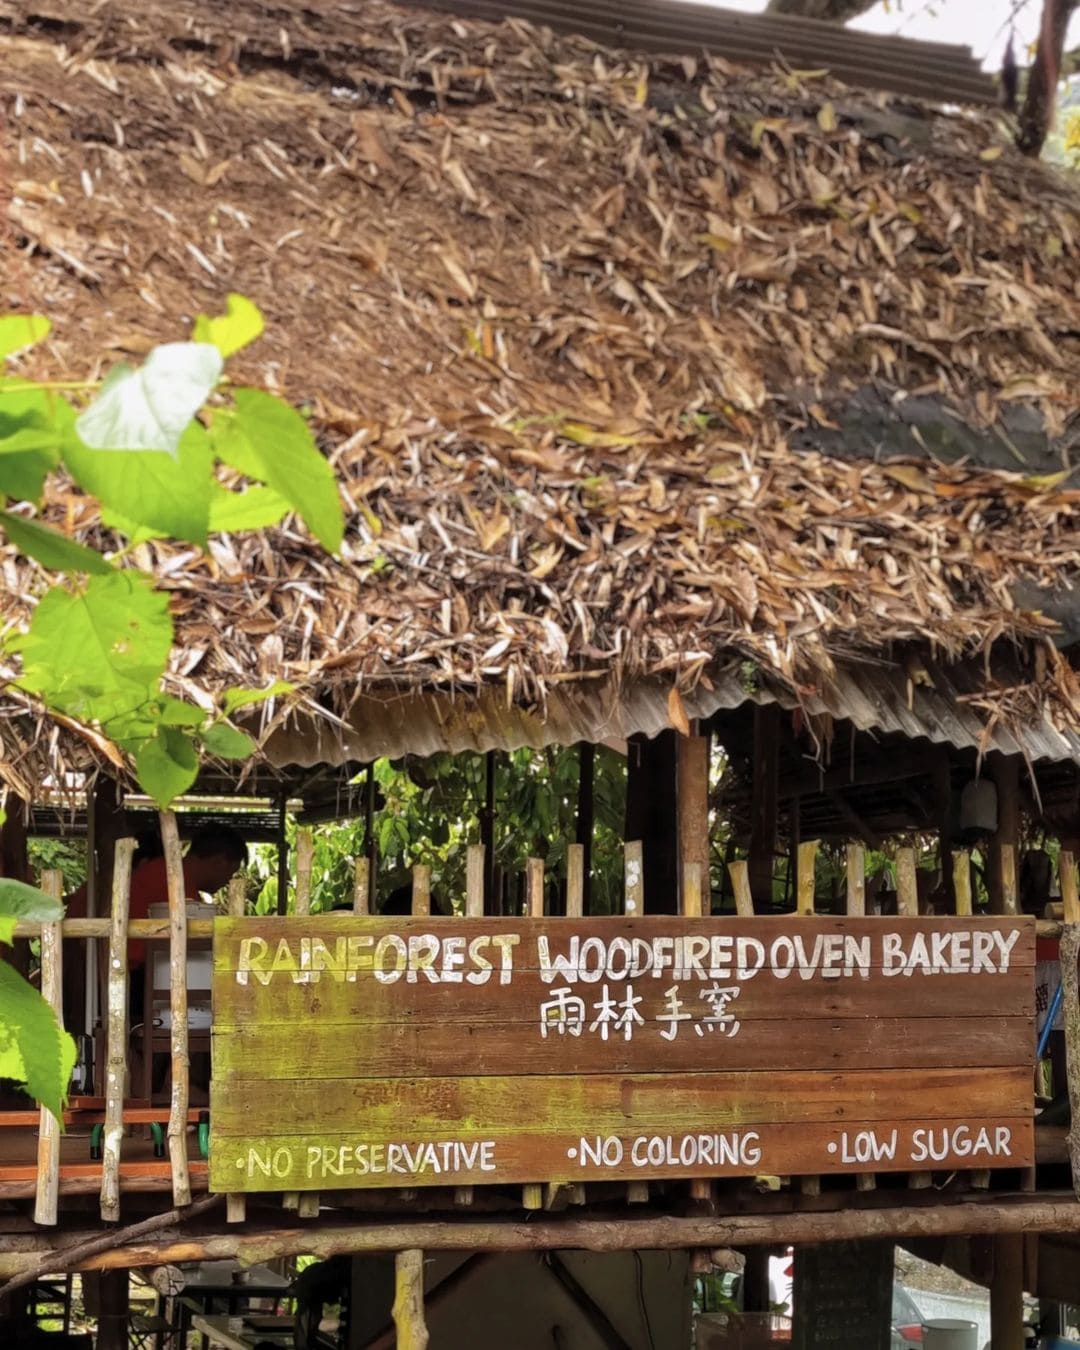 Rainforest Tree House sign